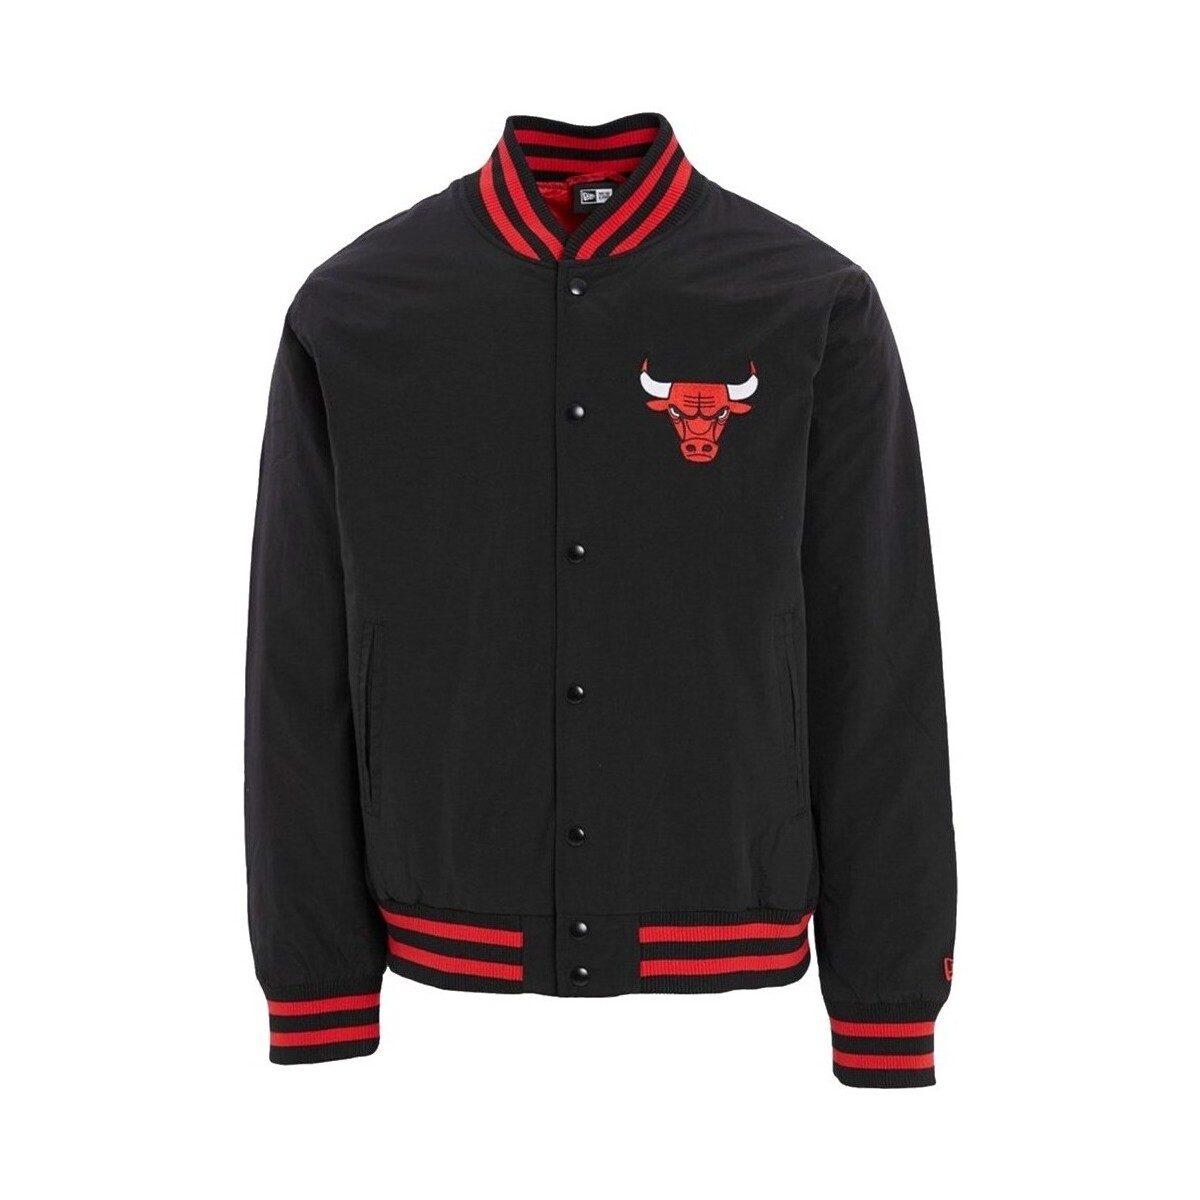 Îmbracaminte Bărbați Geci și Jachete New-Era Team Logo Bomber Chicago Bulls Jacket Negre, Vișiniu